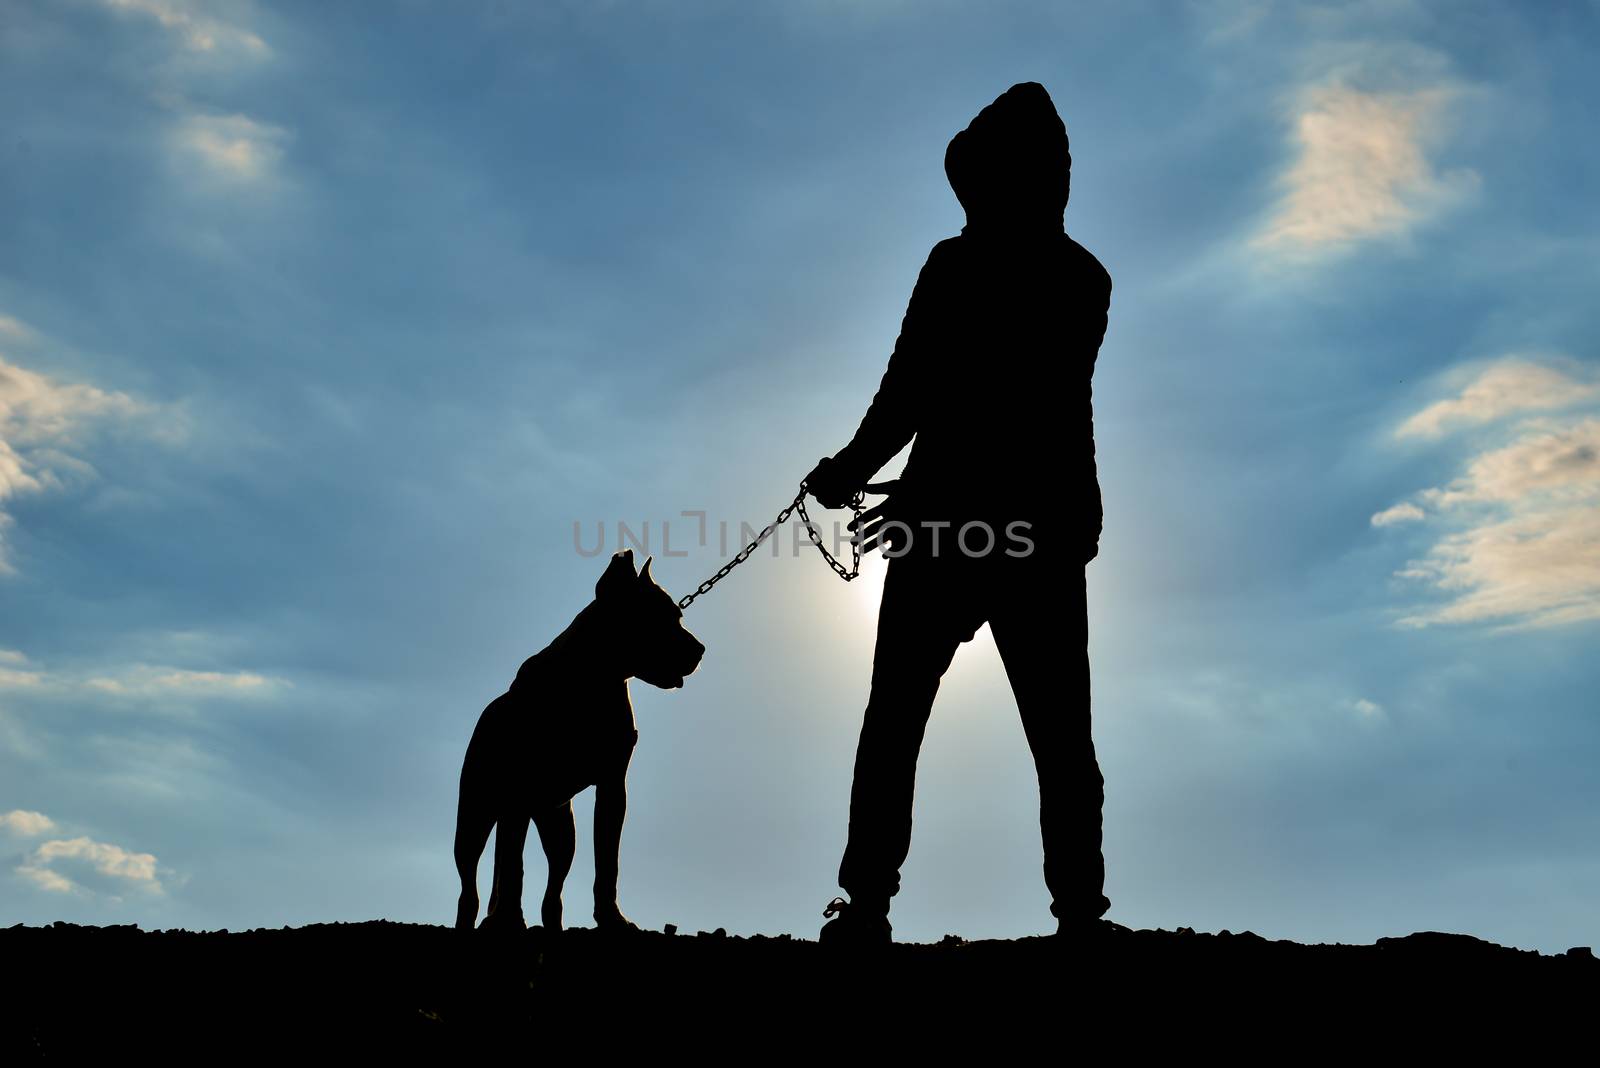 human silhouette walking his dog